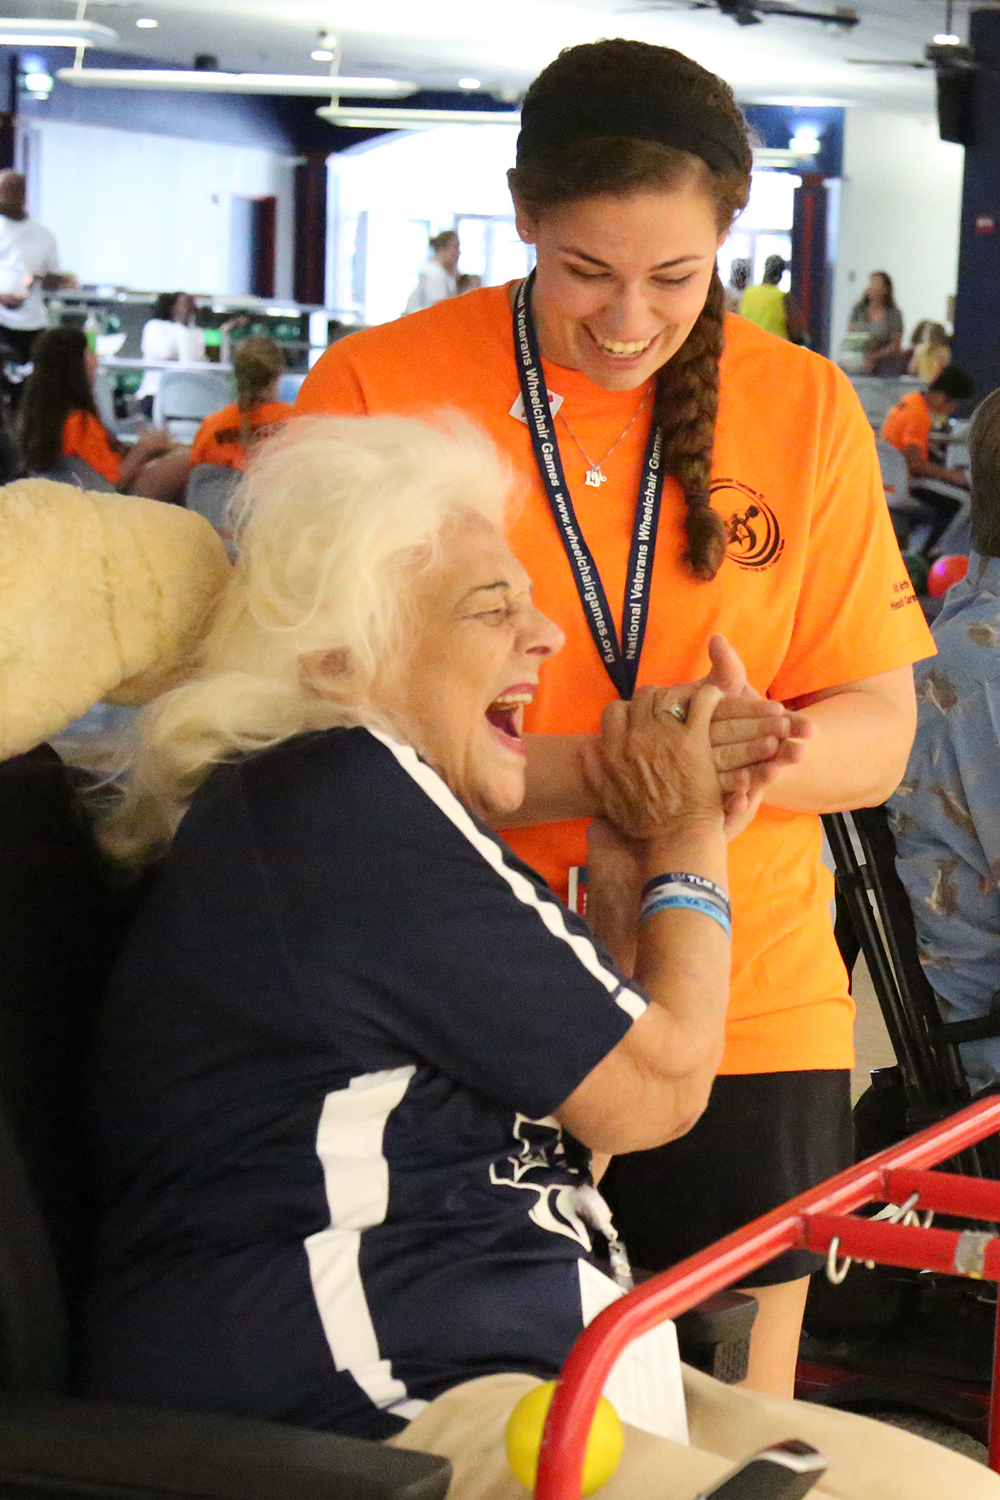 Student volunteer assists Veteran at National Veterans Wheelchair Games